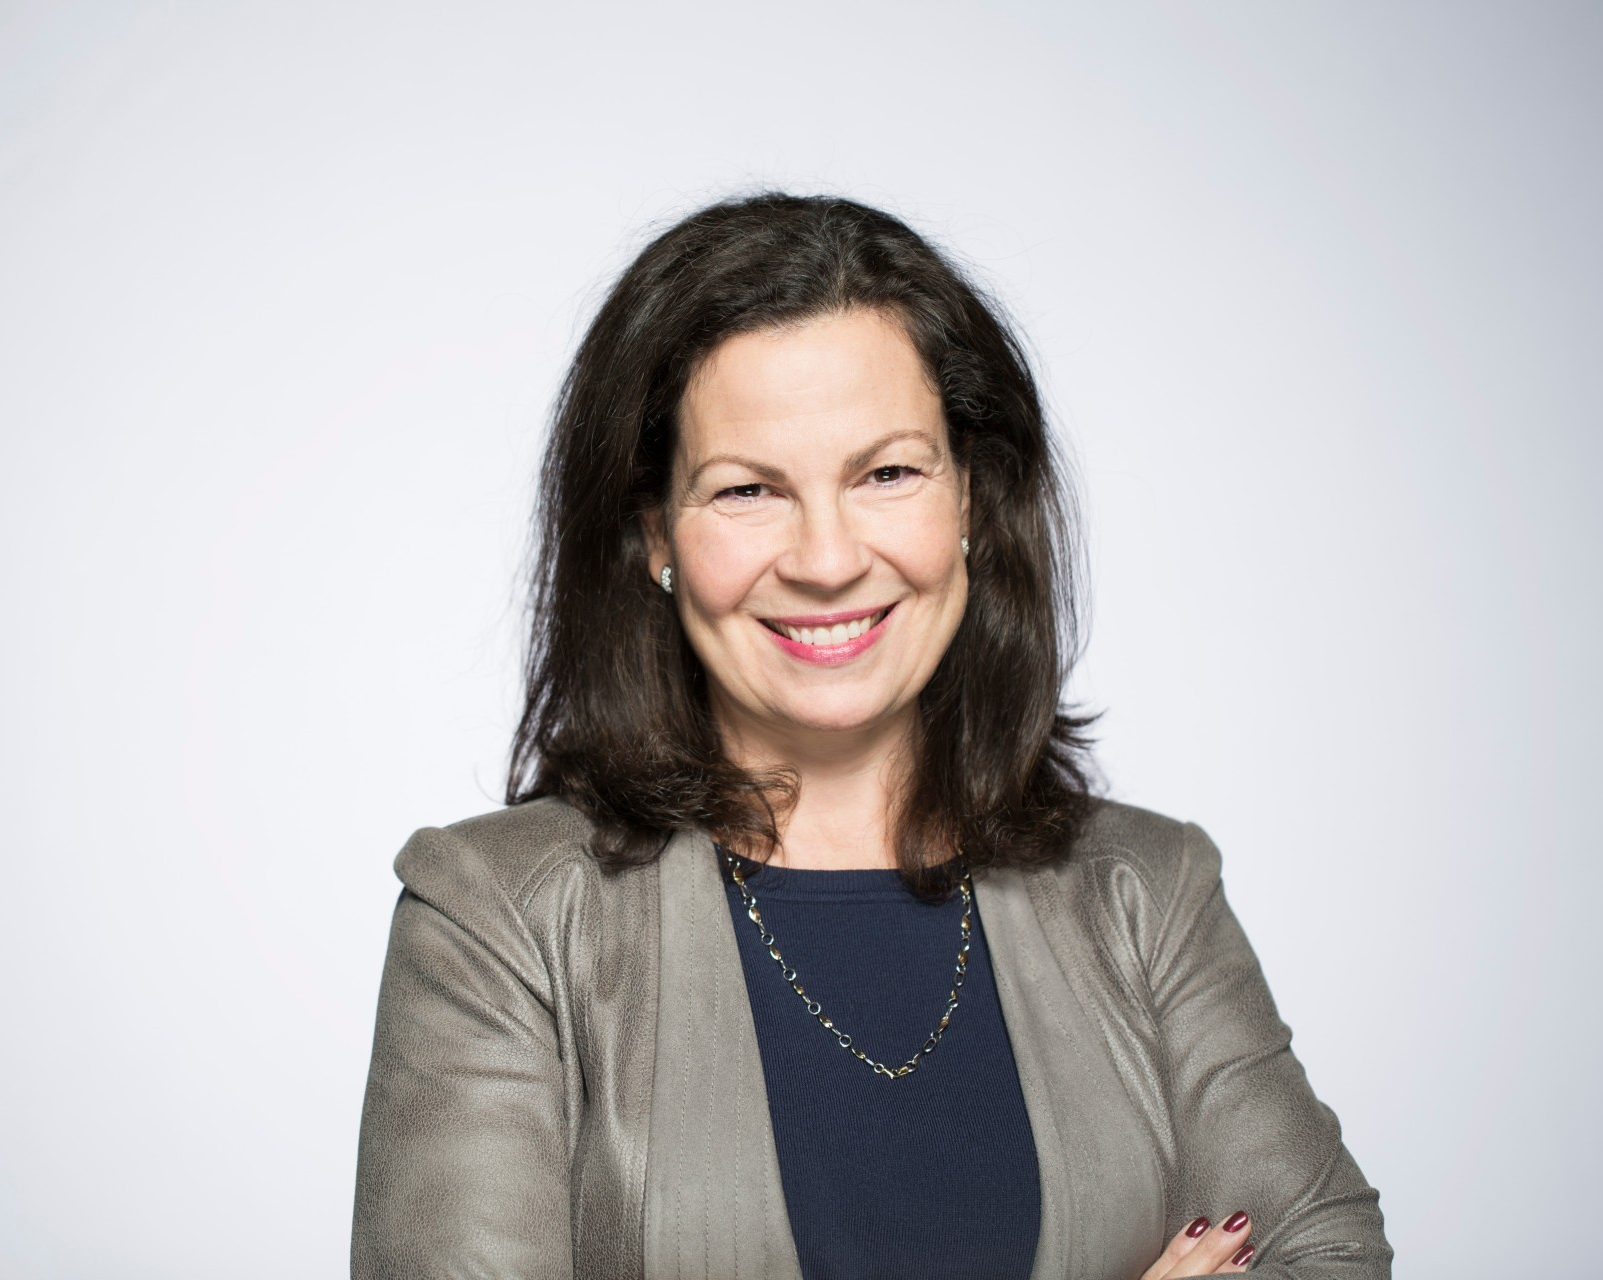 Government of Quebec appoints Anne-Marie Croteau to the board of directors of the Autorité des marchés financiers